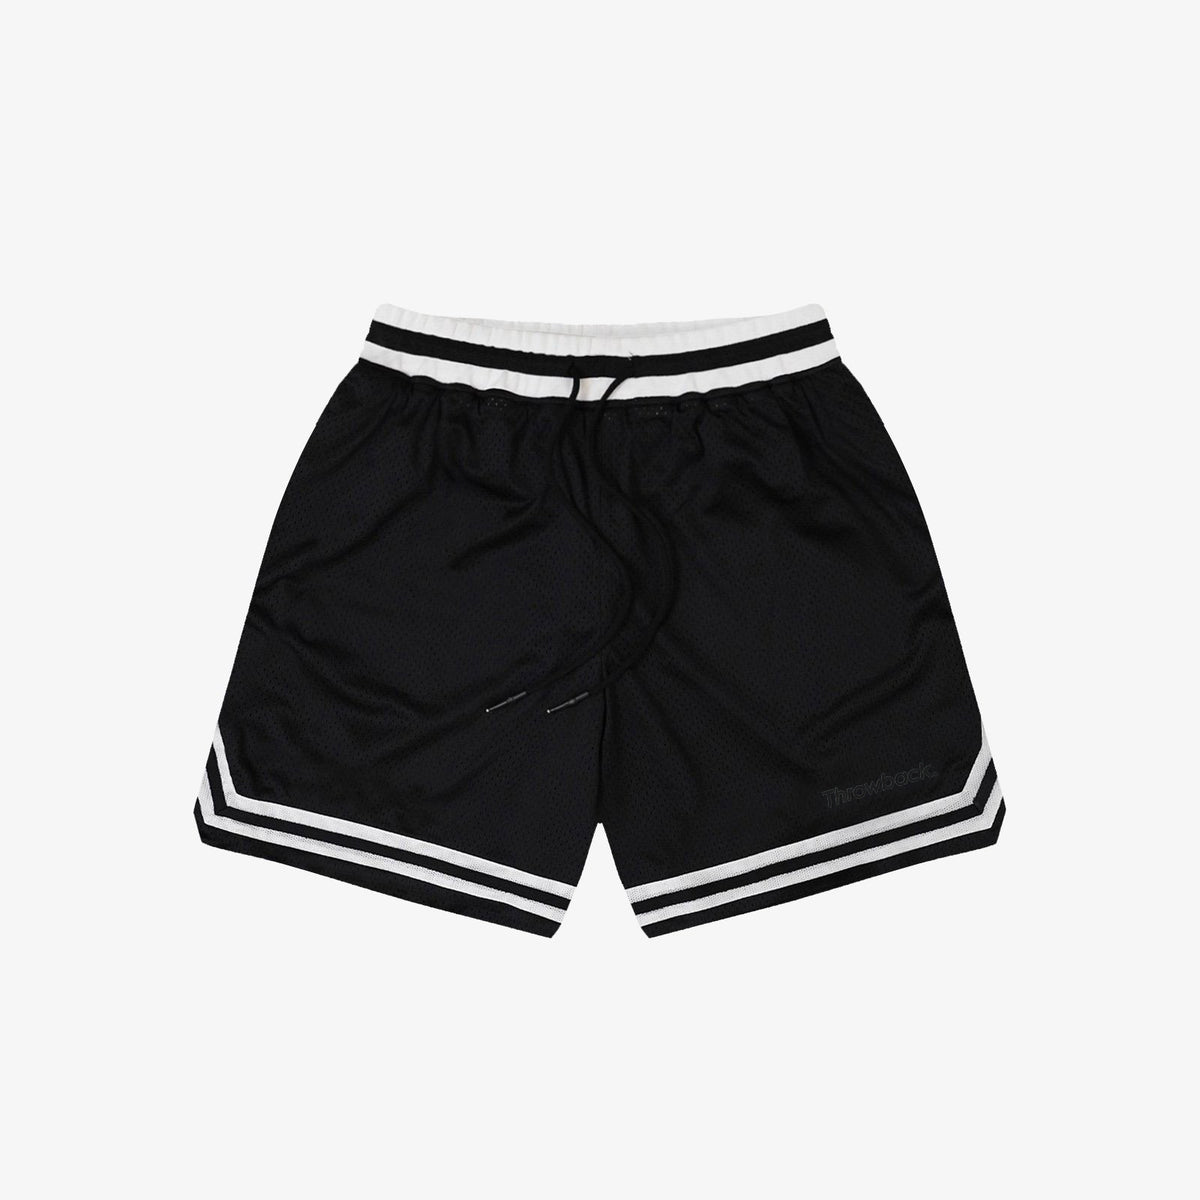 Throwback Blacktop Classic Mesh Shorts with Pockets - Black